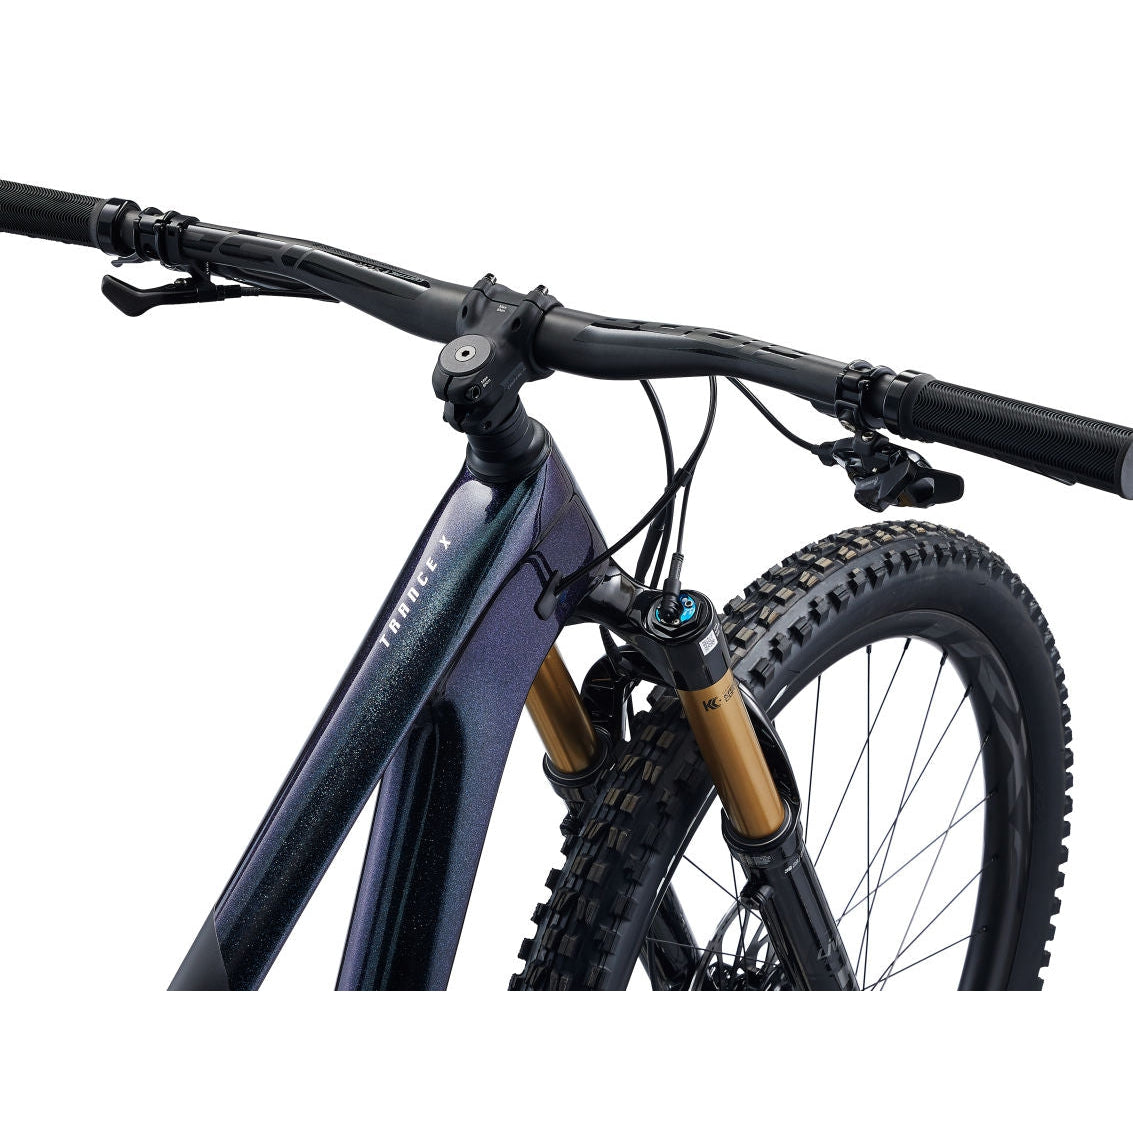 Giant Trance X Advanced Pro 29 1 Mountain Bike - Bikes - Bicycle Warehouse